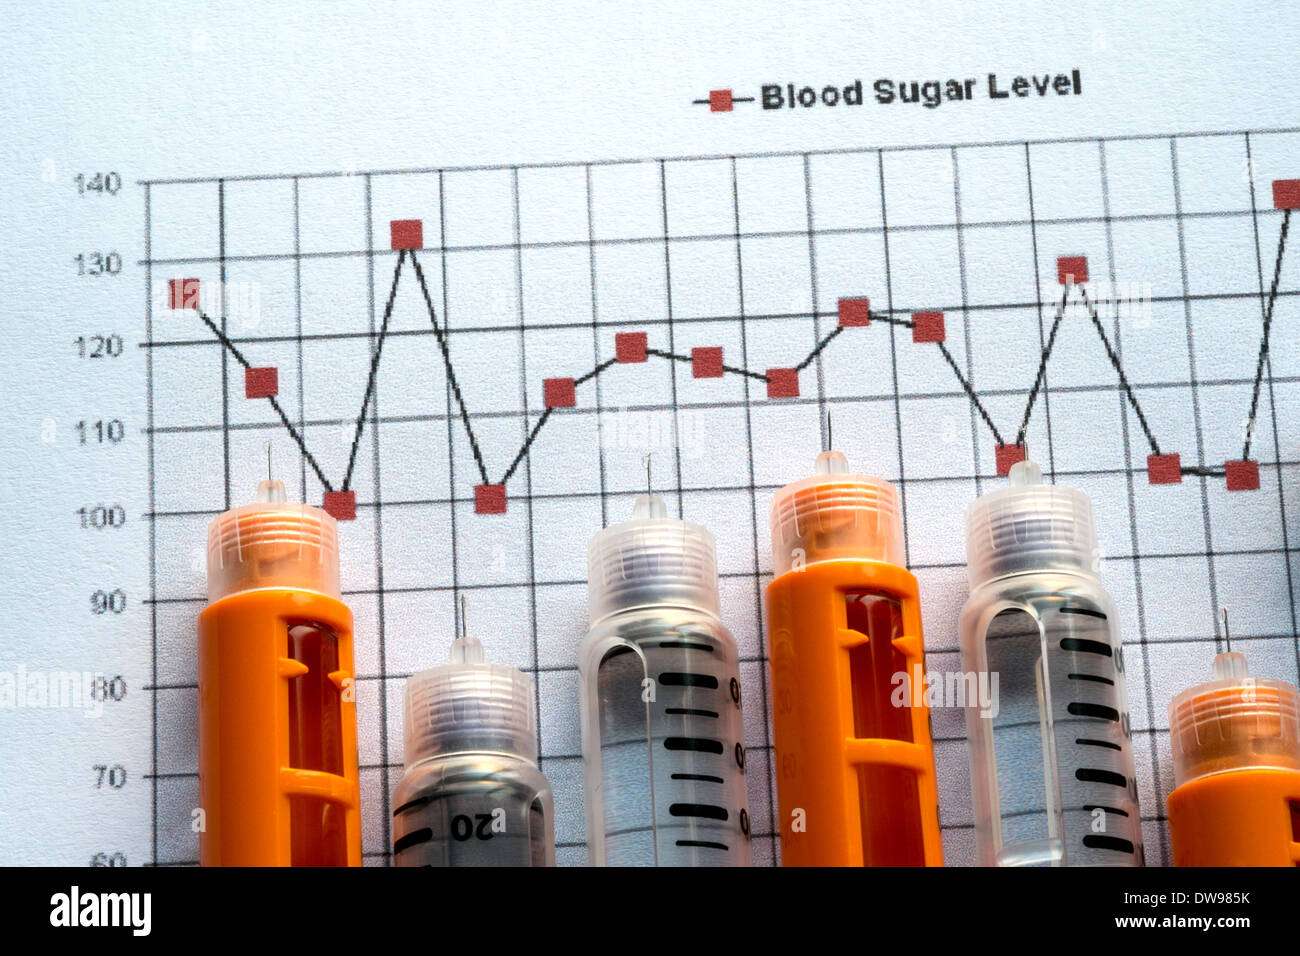 Insulin Blood Sugar Levels Chart